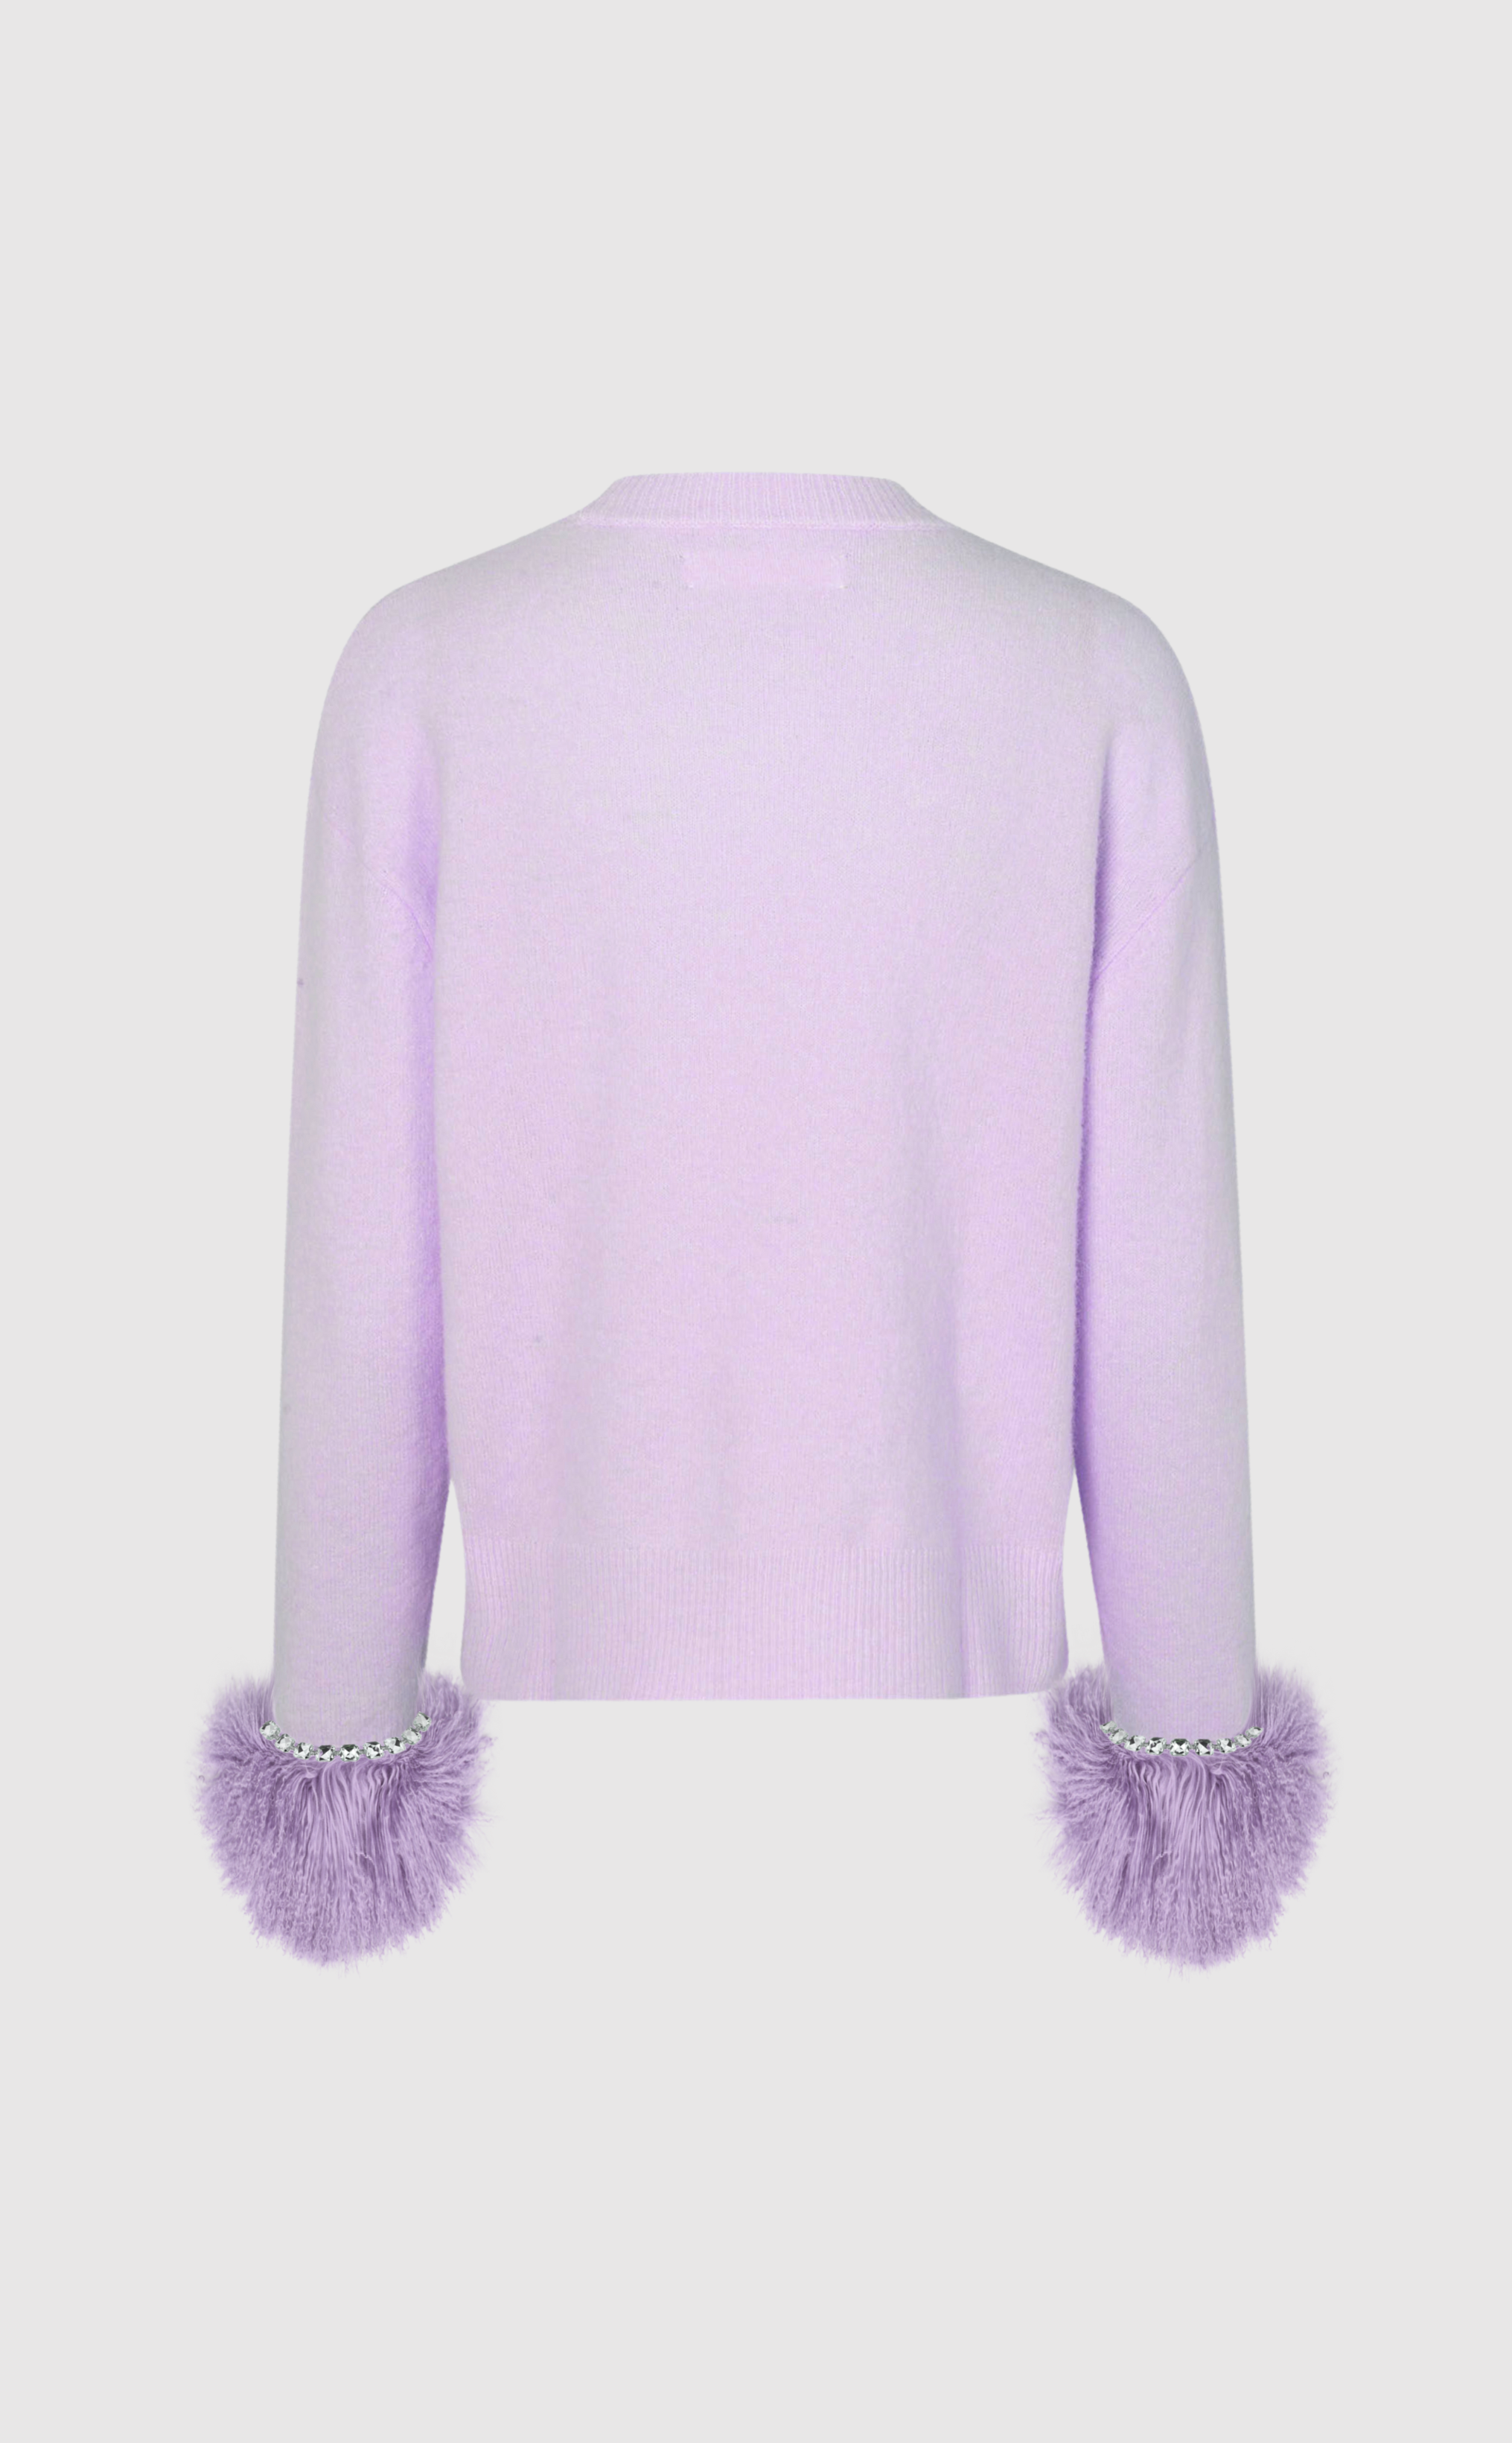 Gigi long sleeve sweater in lilac